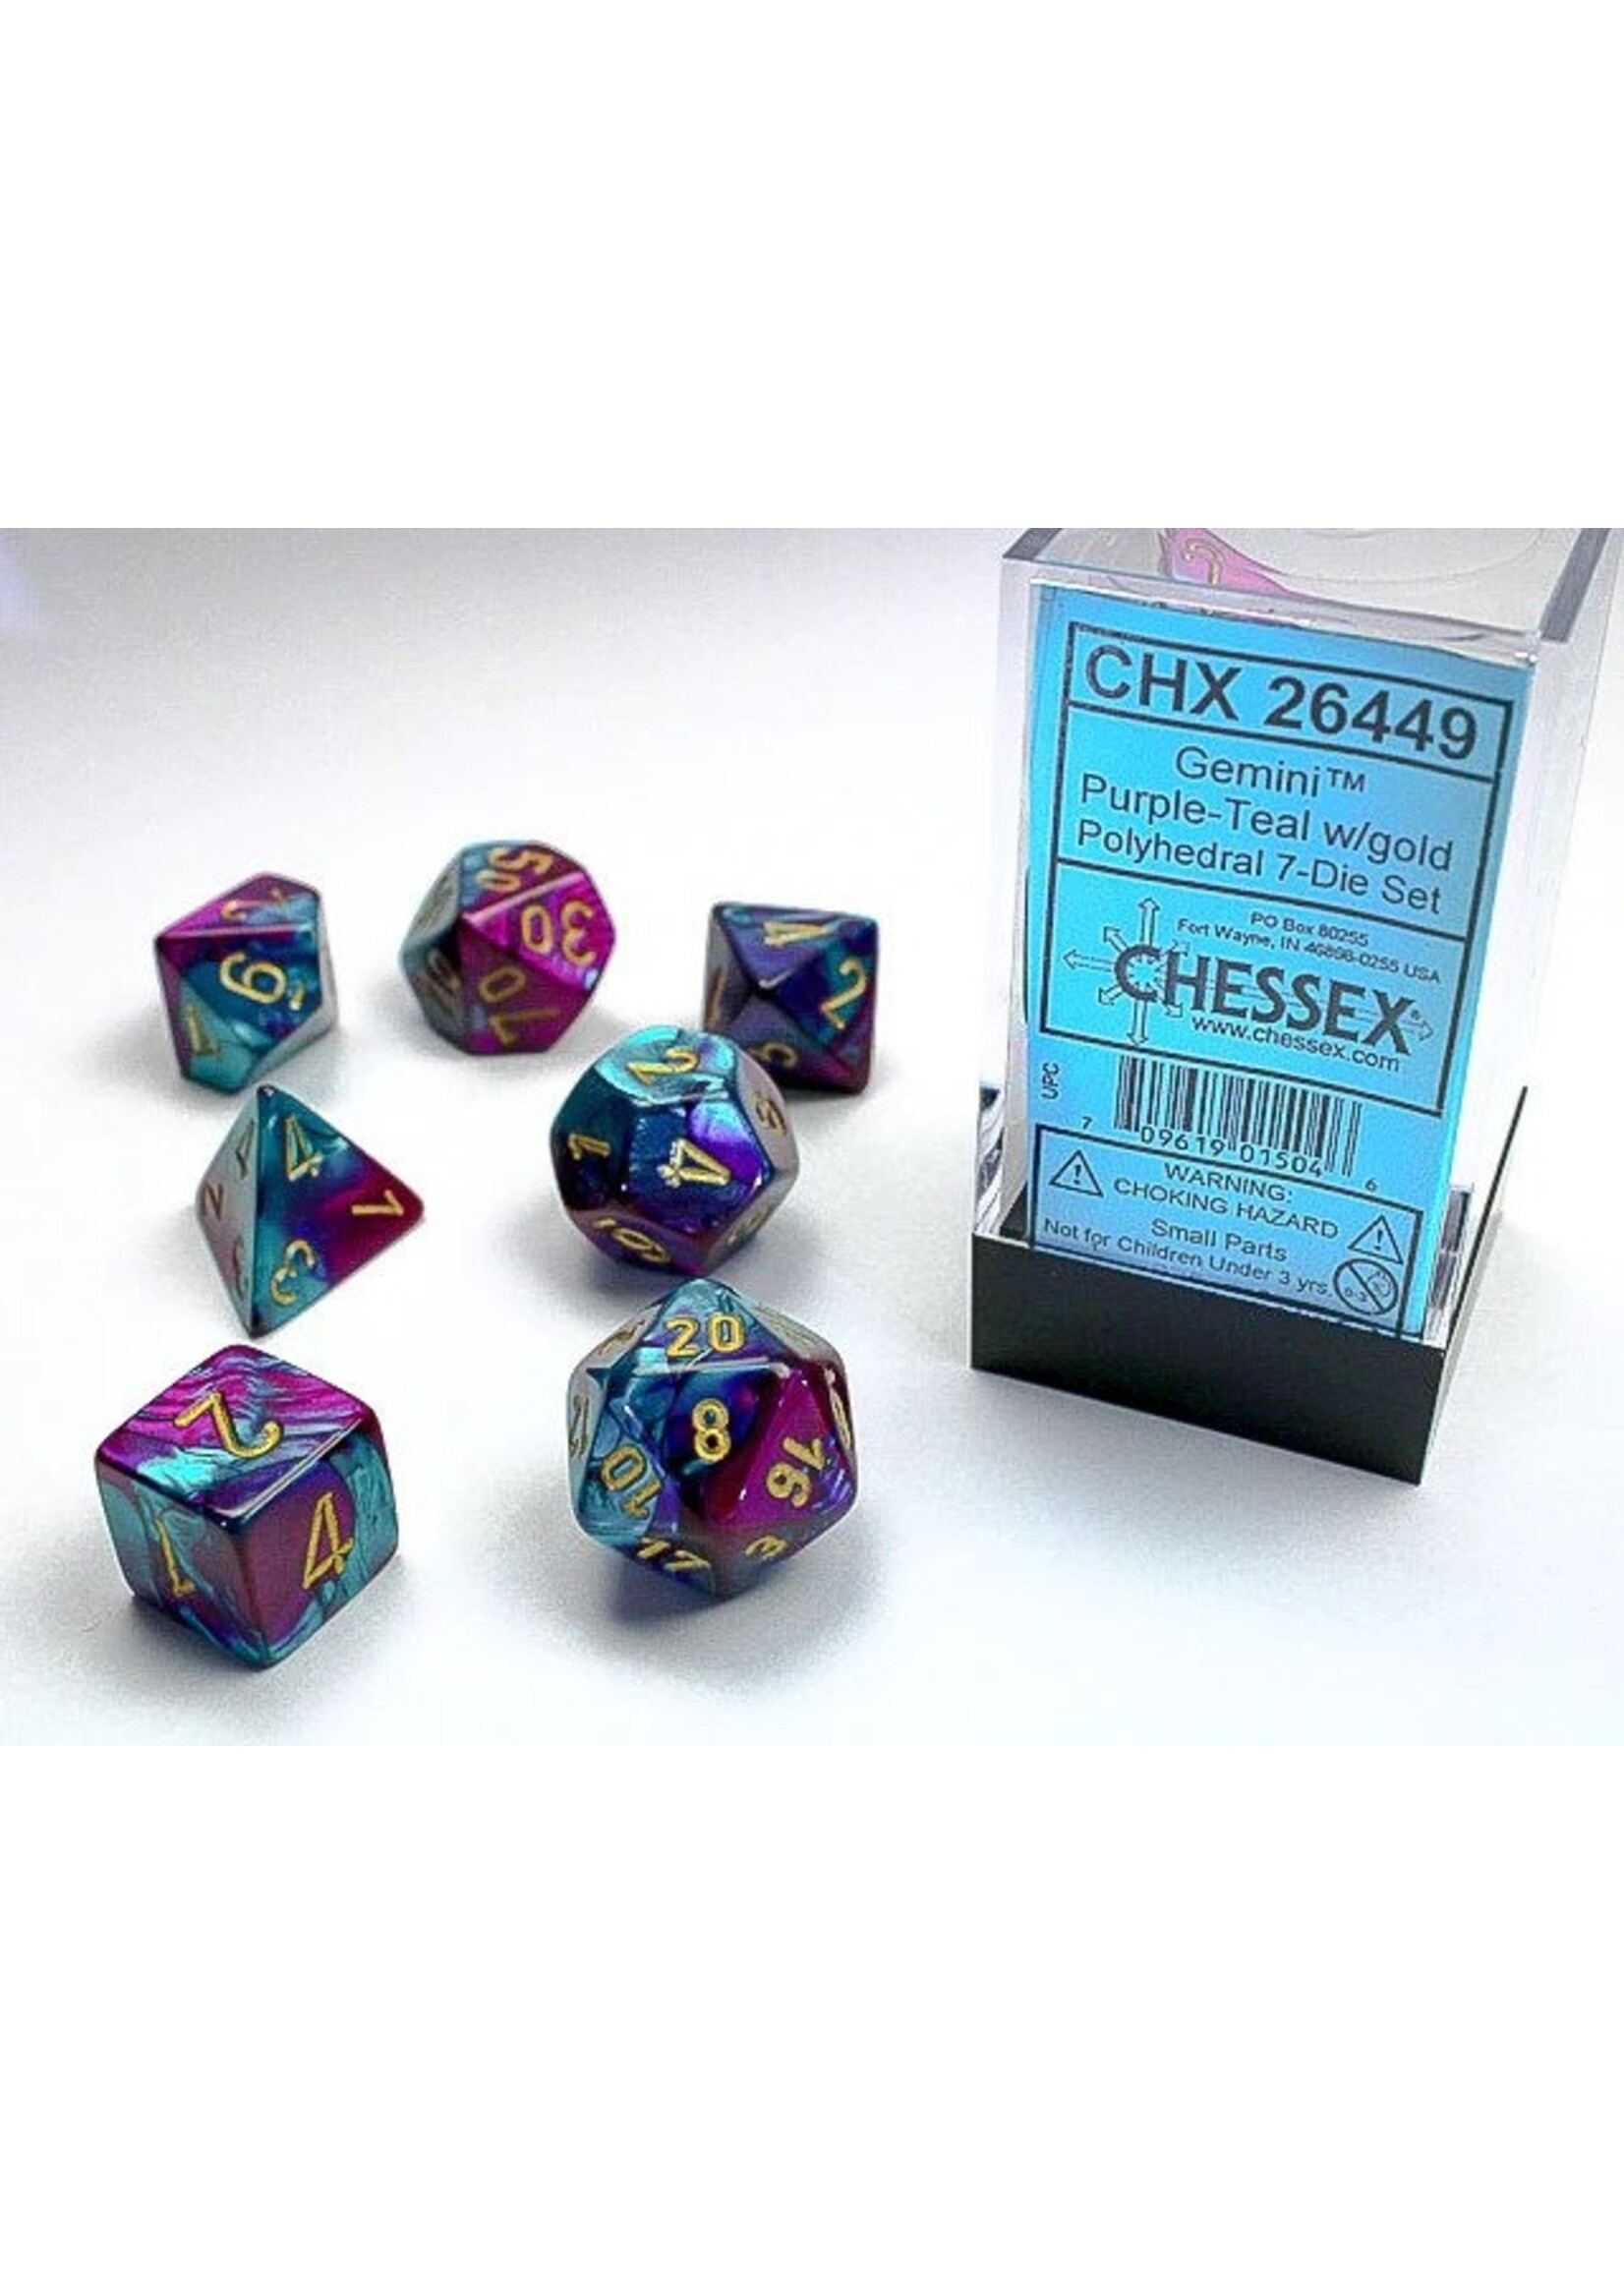 Chessex GMNI 7 die purple-teal/gold